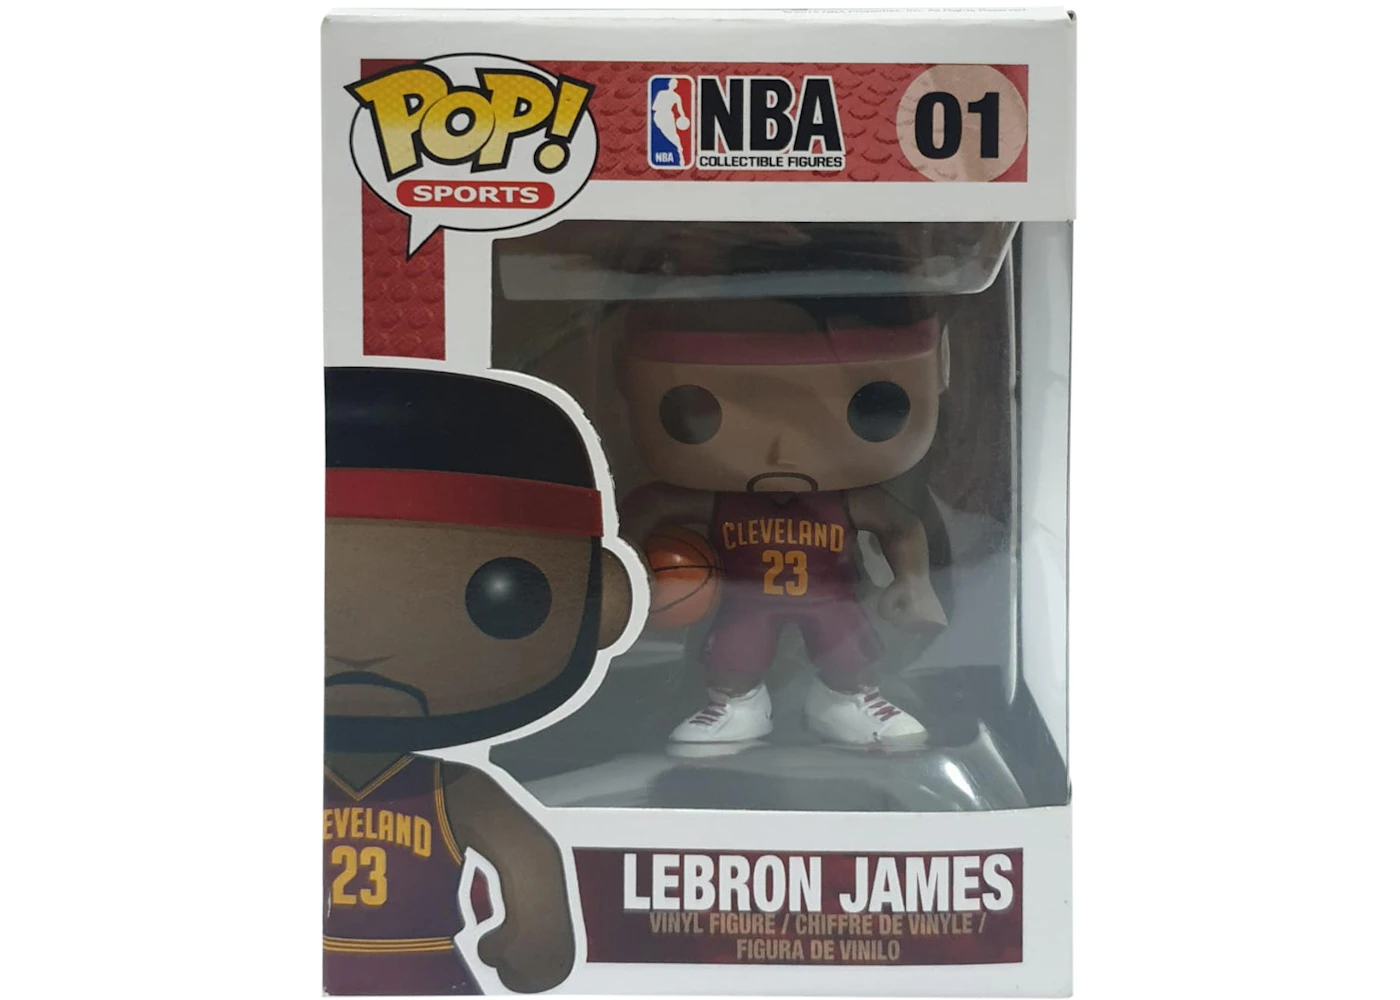 Pop! Sports NBA Lebron James Figure -